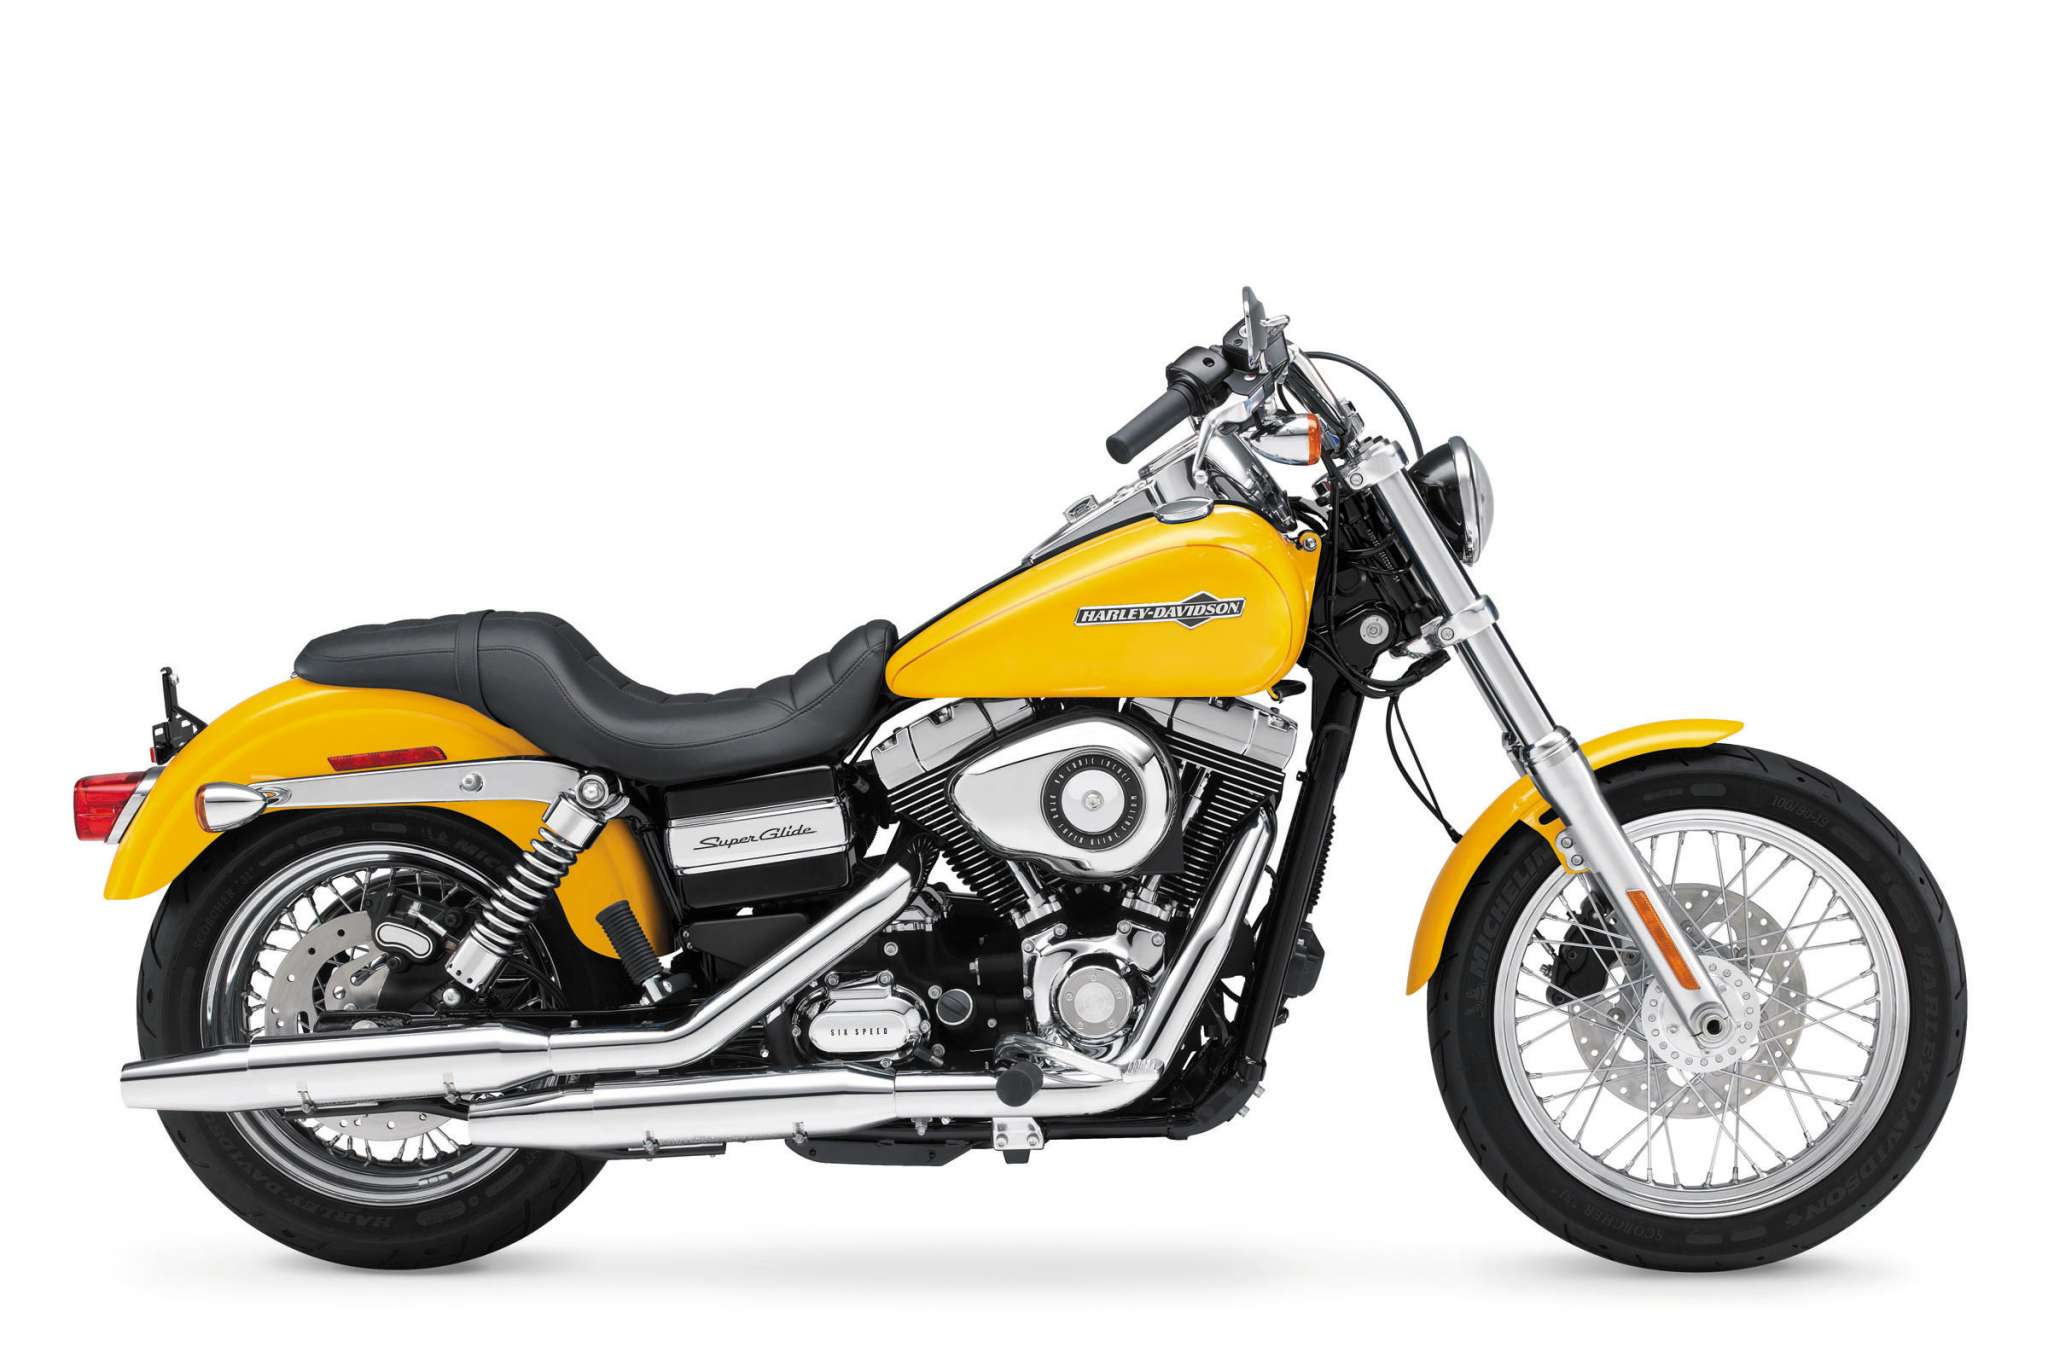 2013 Harley Davidson Fxdc Dyna Super Glide Custom Review